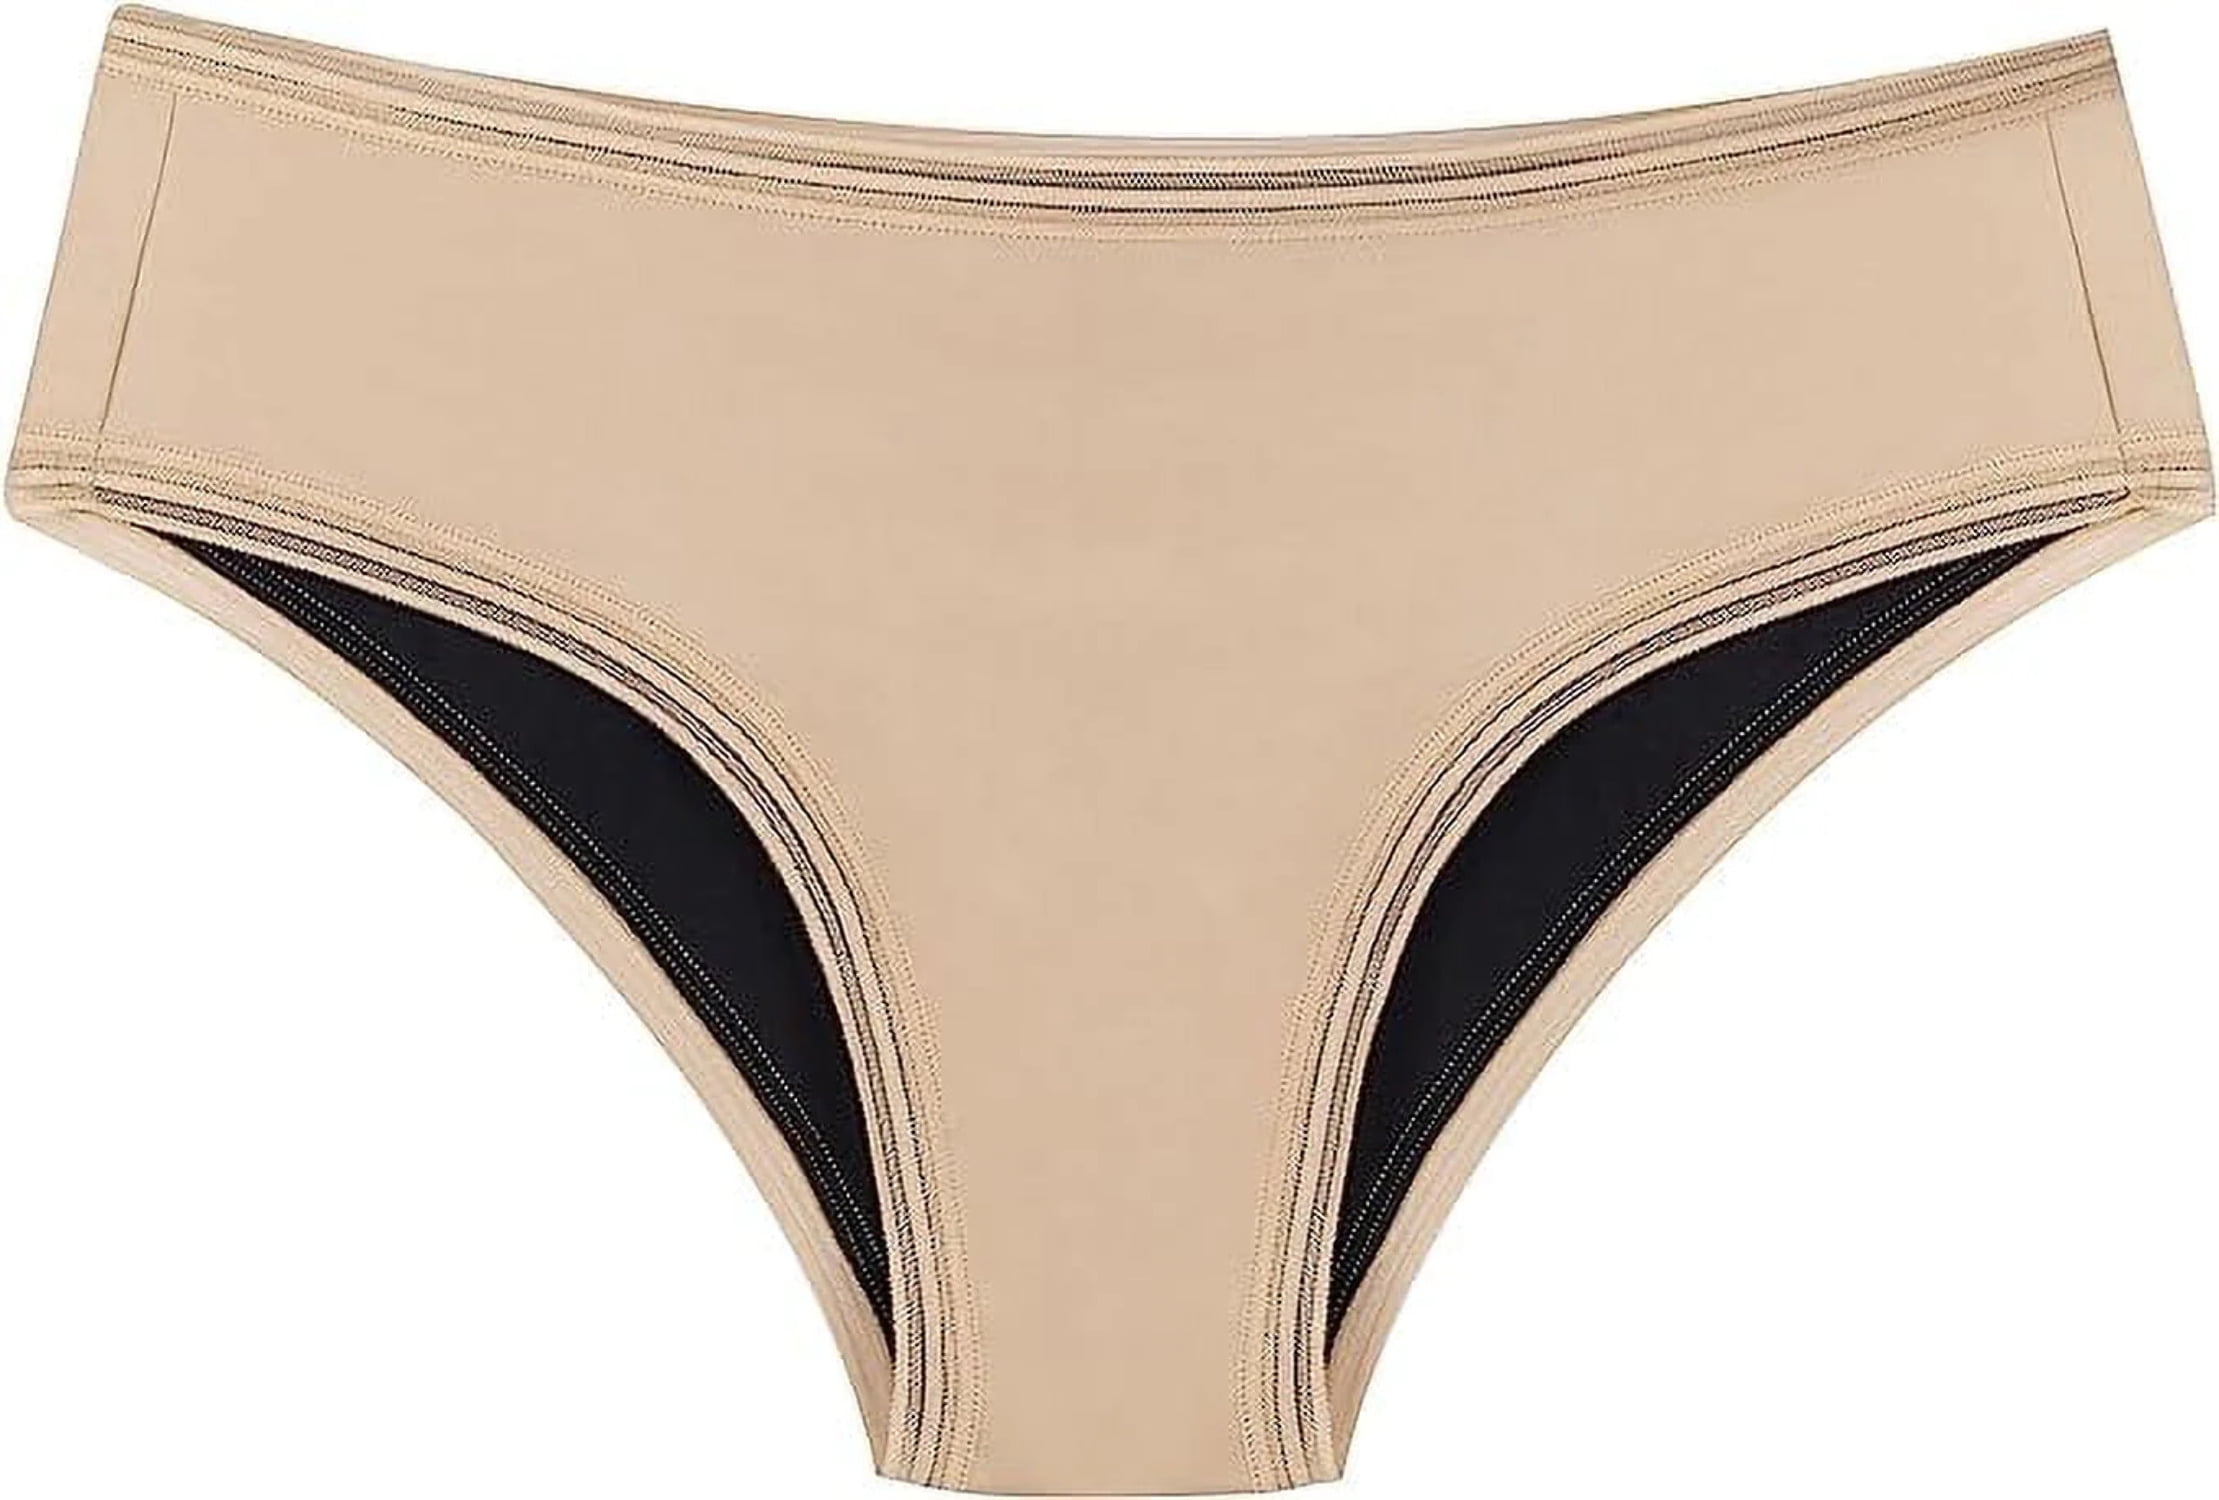 Thinx Teens Super Absorbency Cotton Bikini Period Underwear Extra